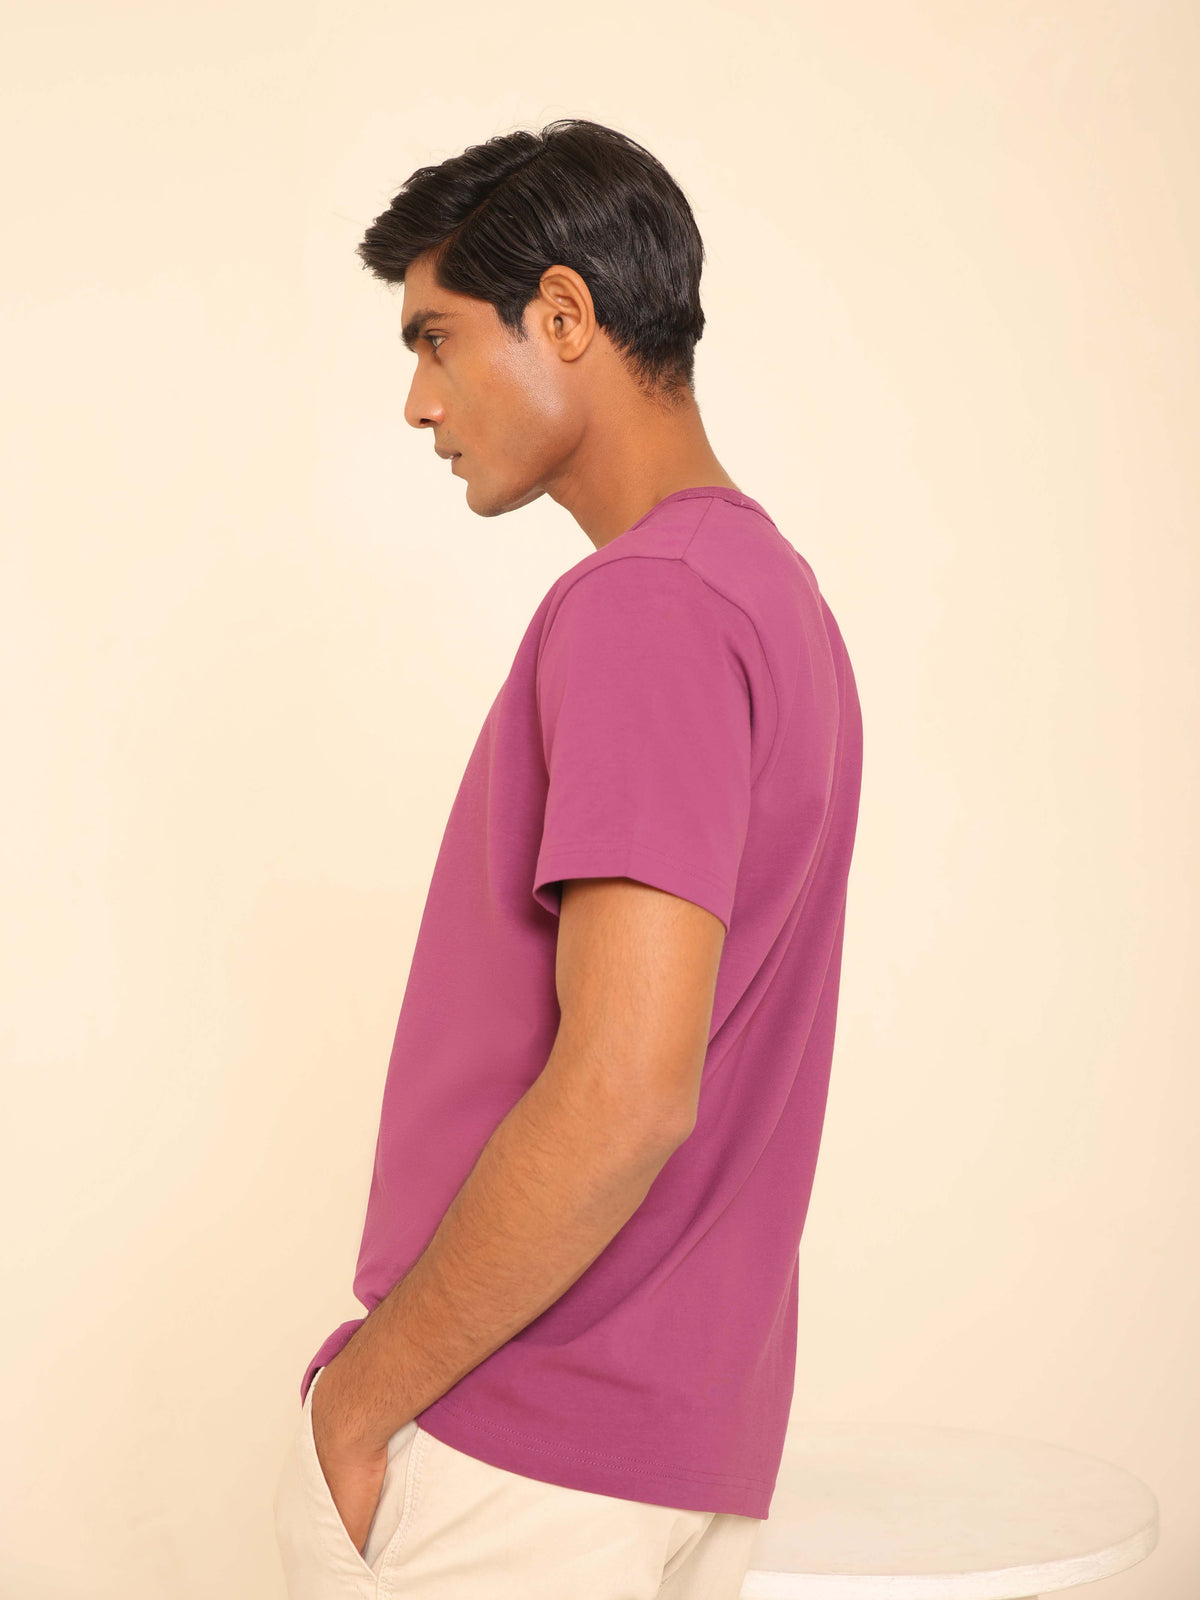 4-Way Stretch T-Shirt in Purple